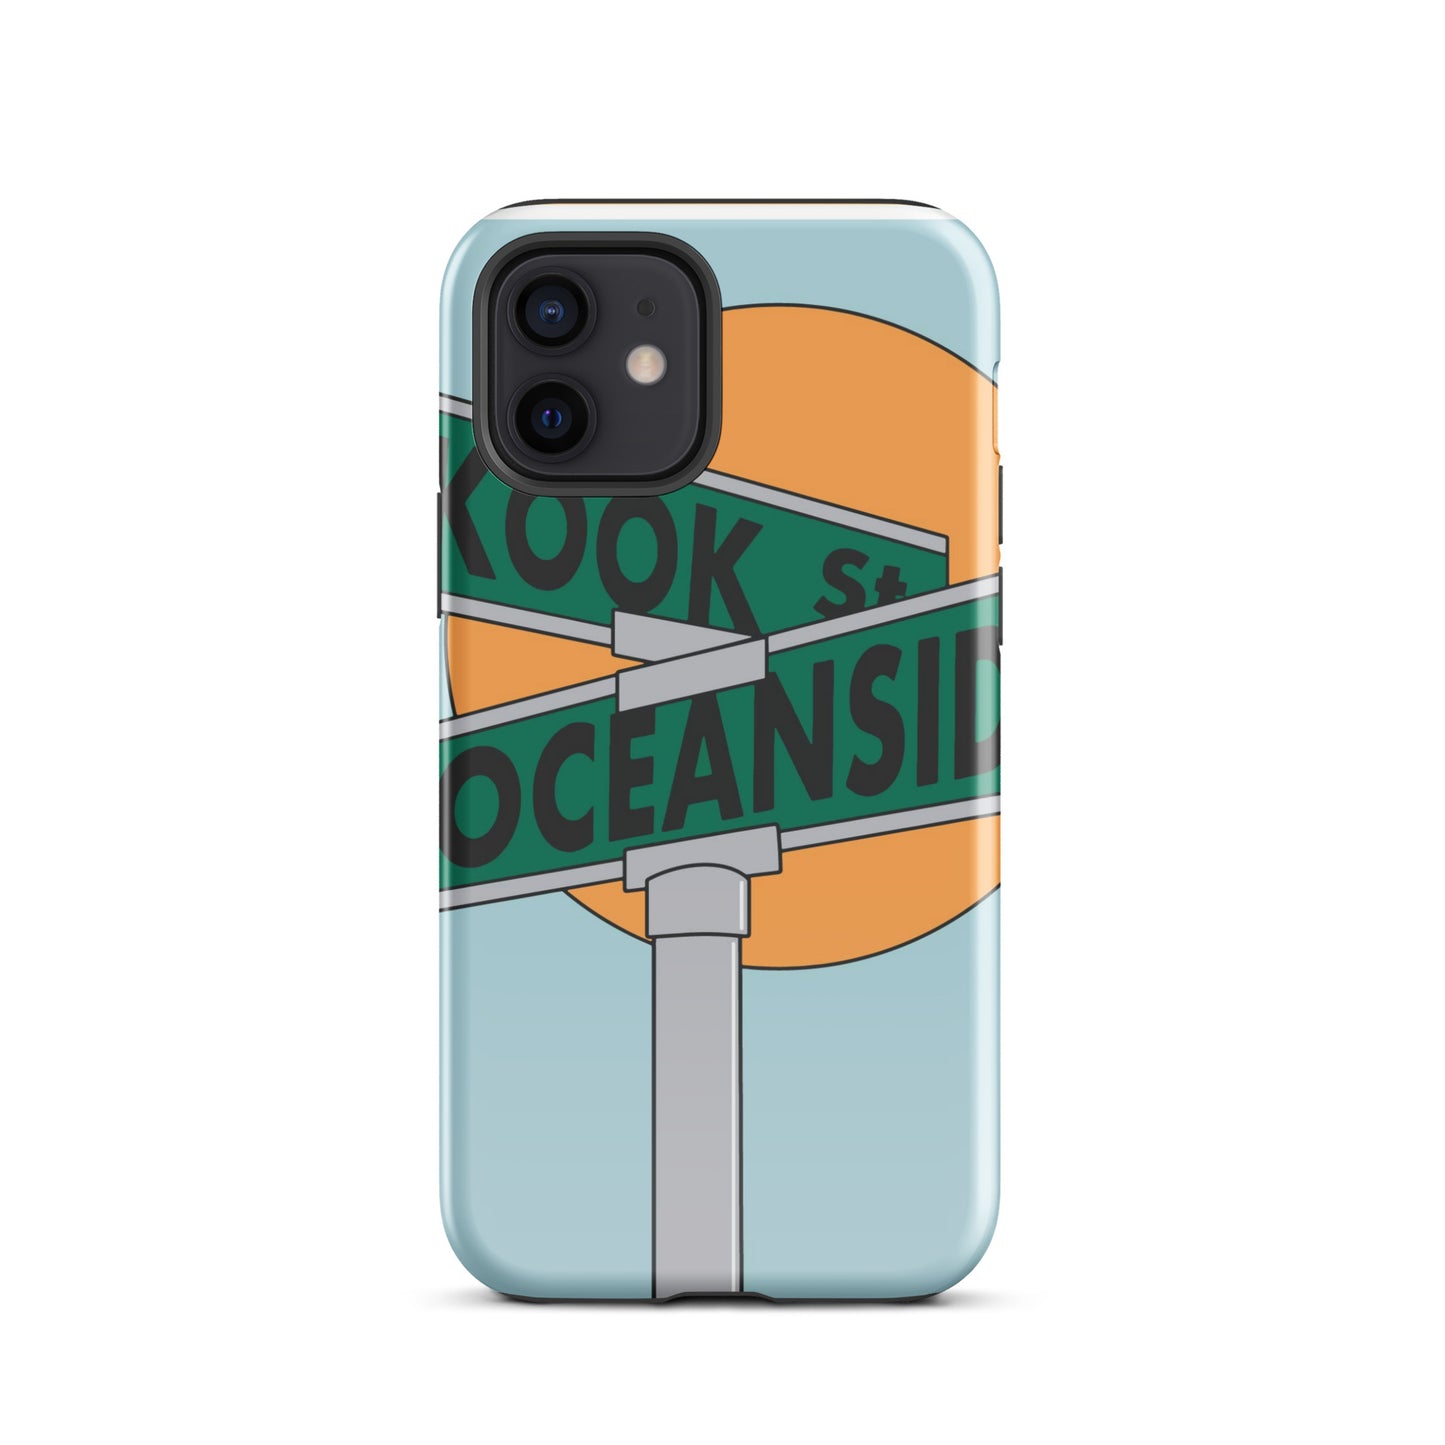 Kook Street iPhone® Case